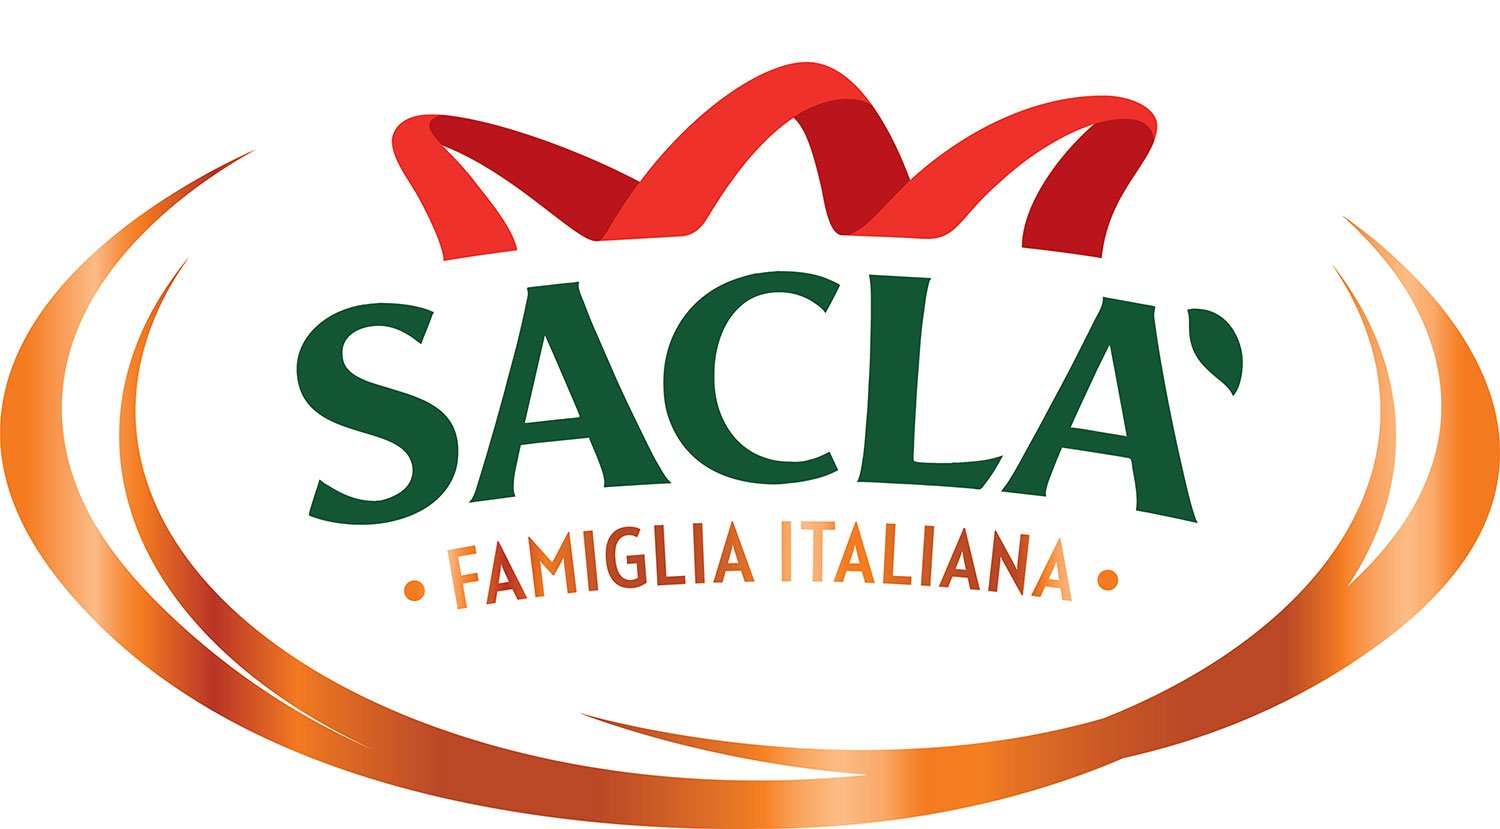 Sacla' - Authentic Italian Food